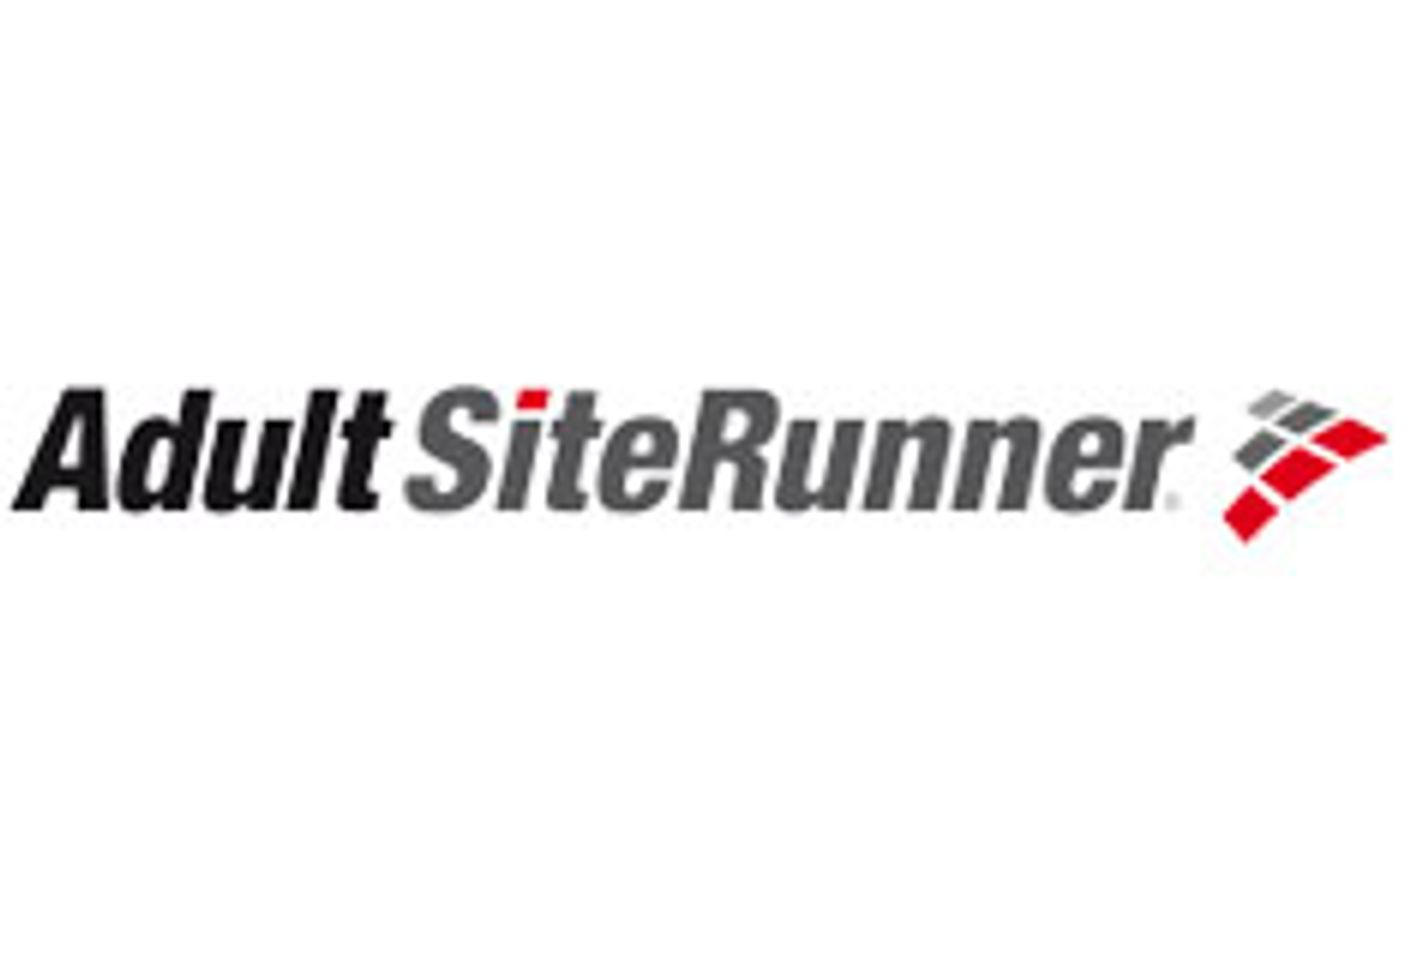 Phoenix Forum Attendees Can Get Info About Adult SiteRunner